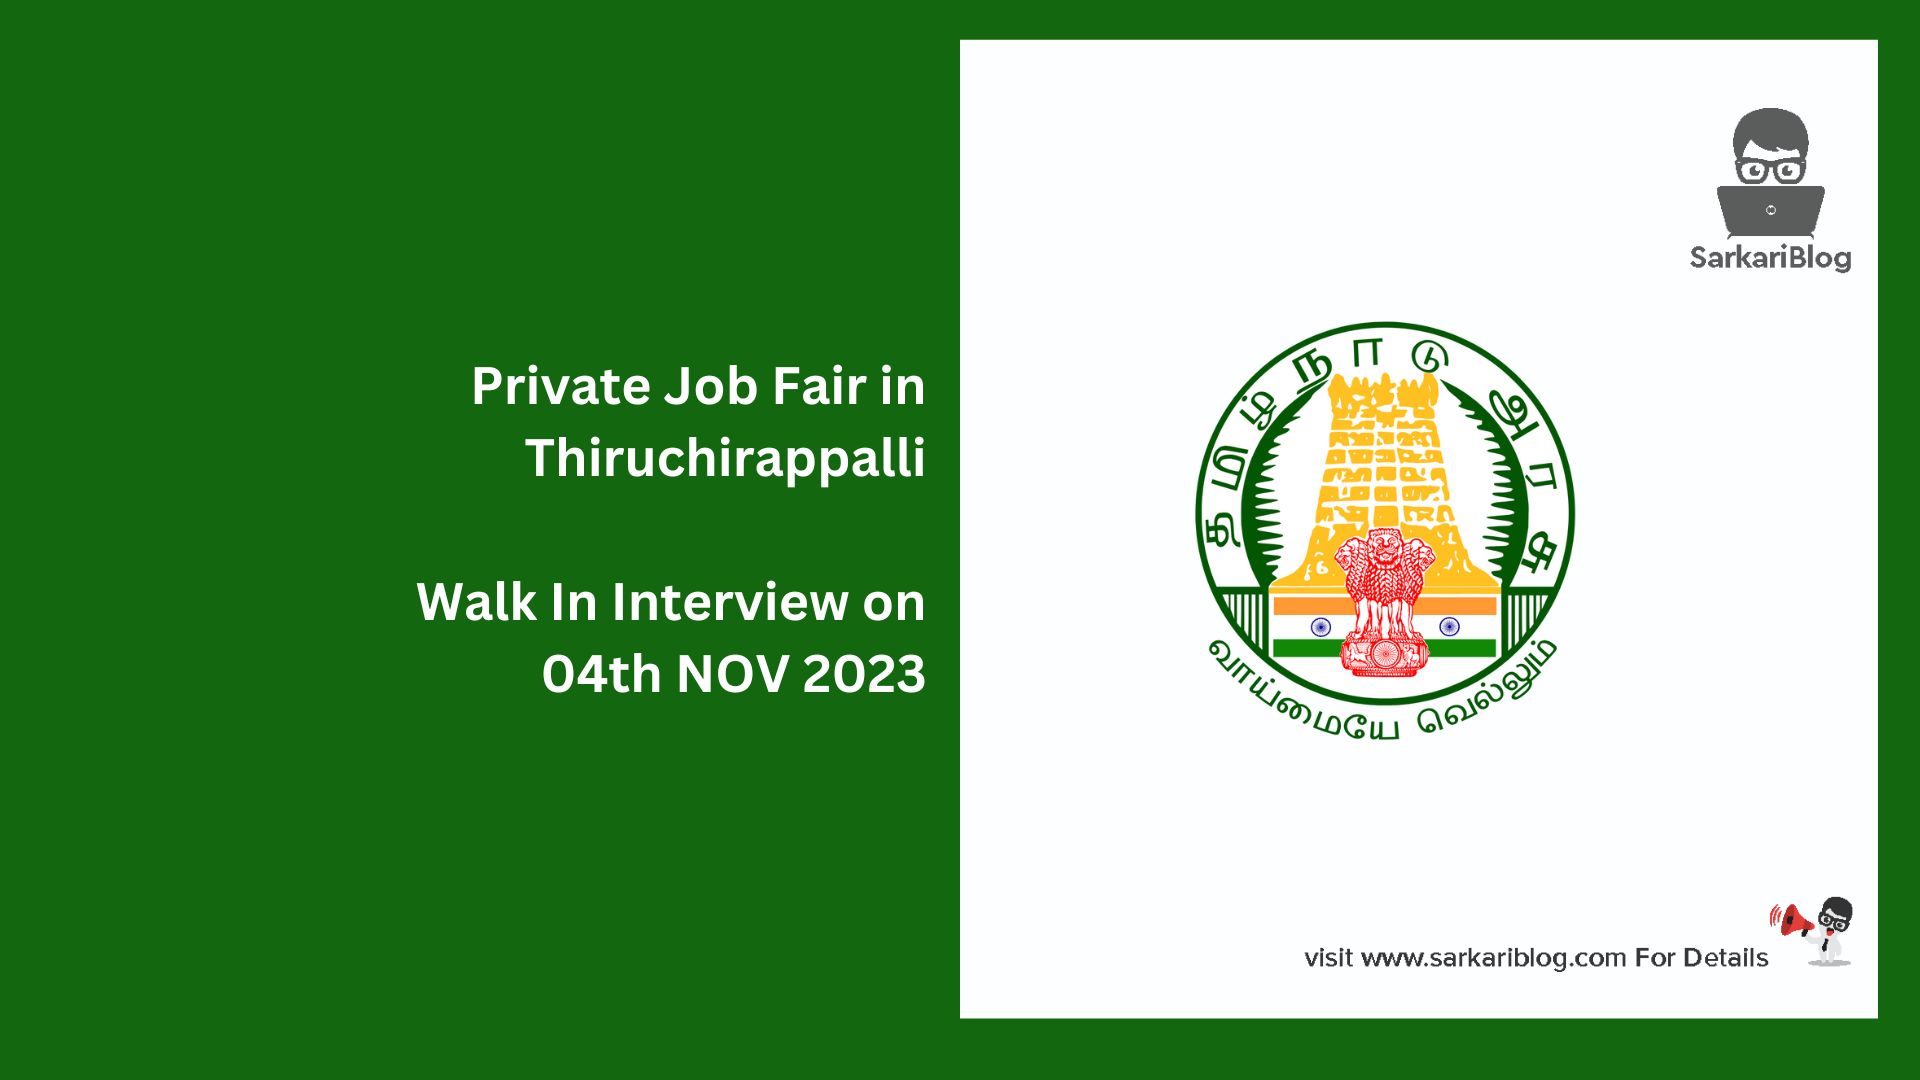 Private Job Fair in Thiruchirappalli